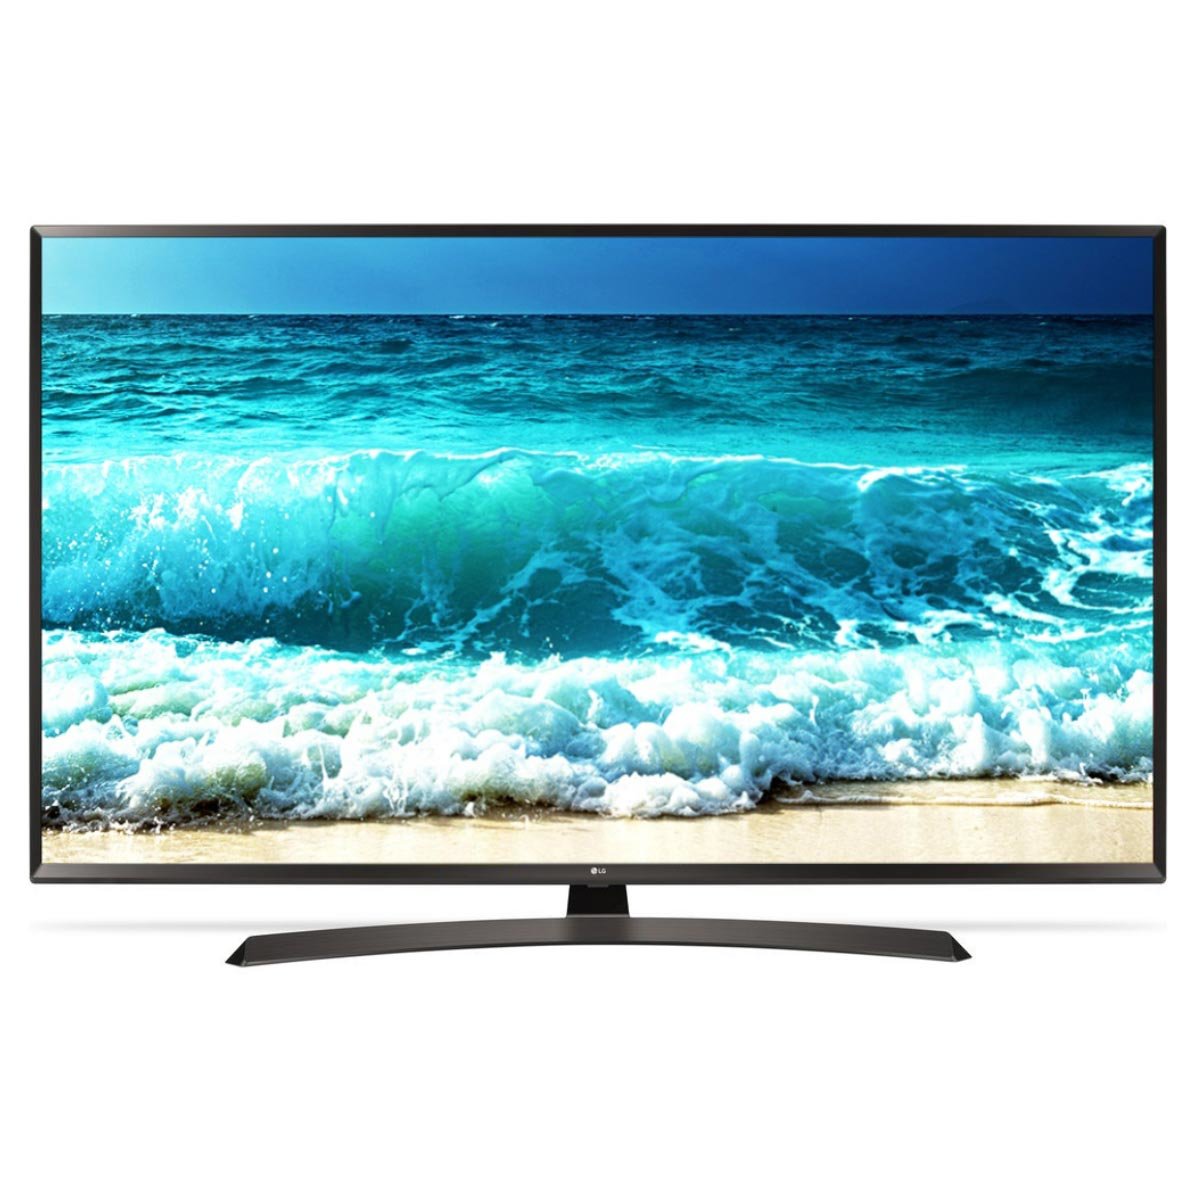 Lg 55uj634t 55 Inch 139cm Smart 4k Uhd Led Lcd Tv Appliances Online